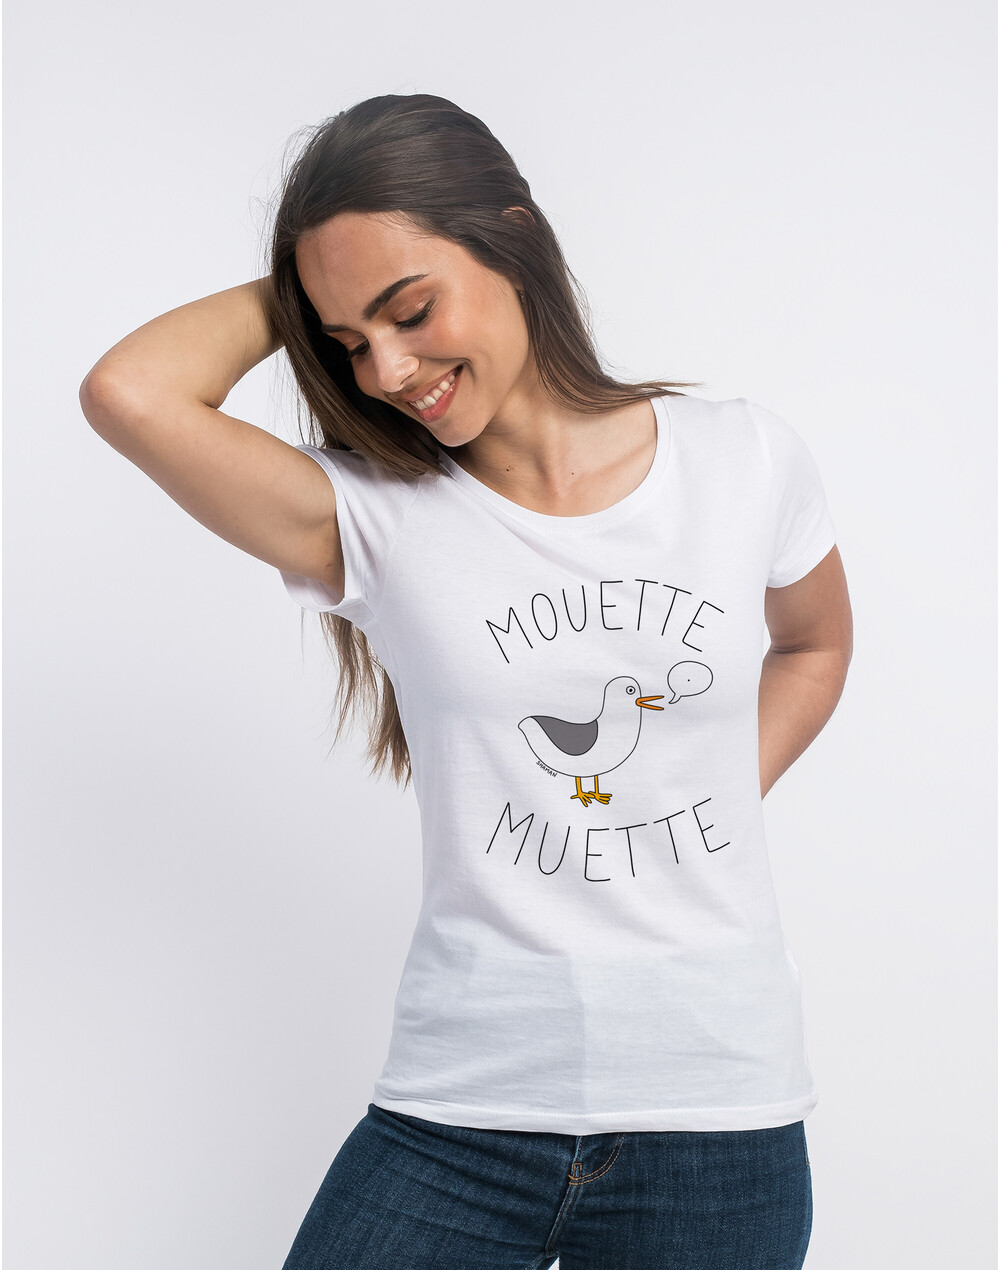 Tshirt MOUETTE MUETTE